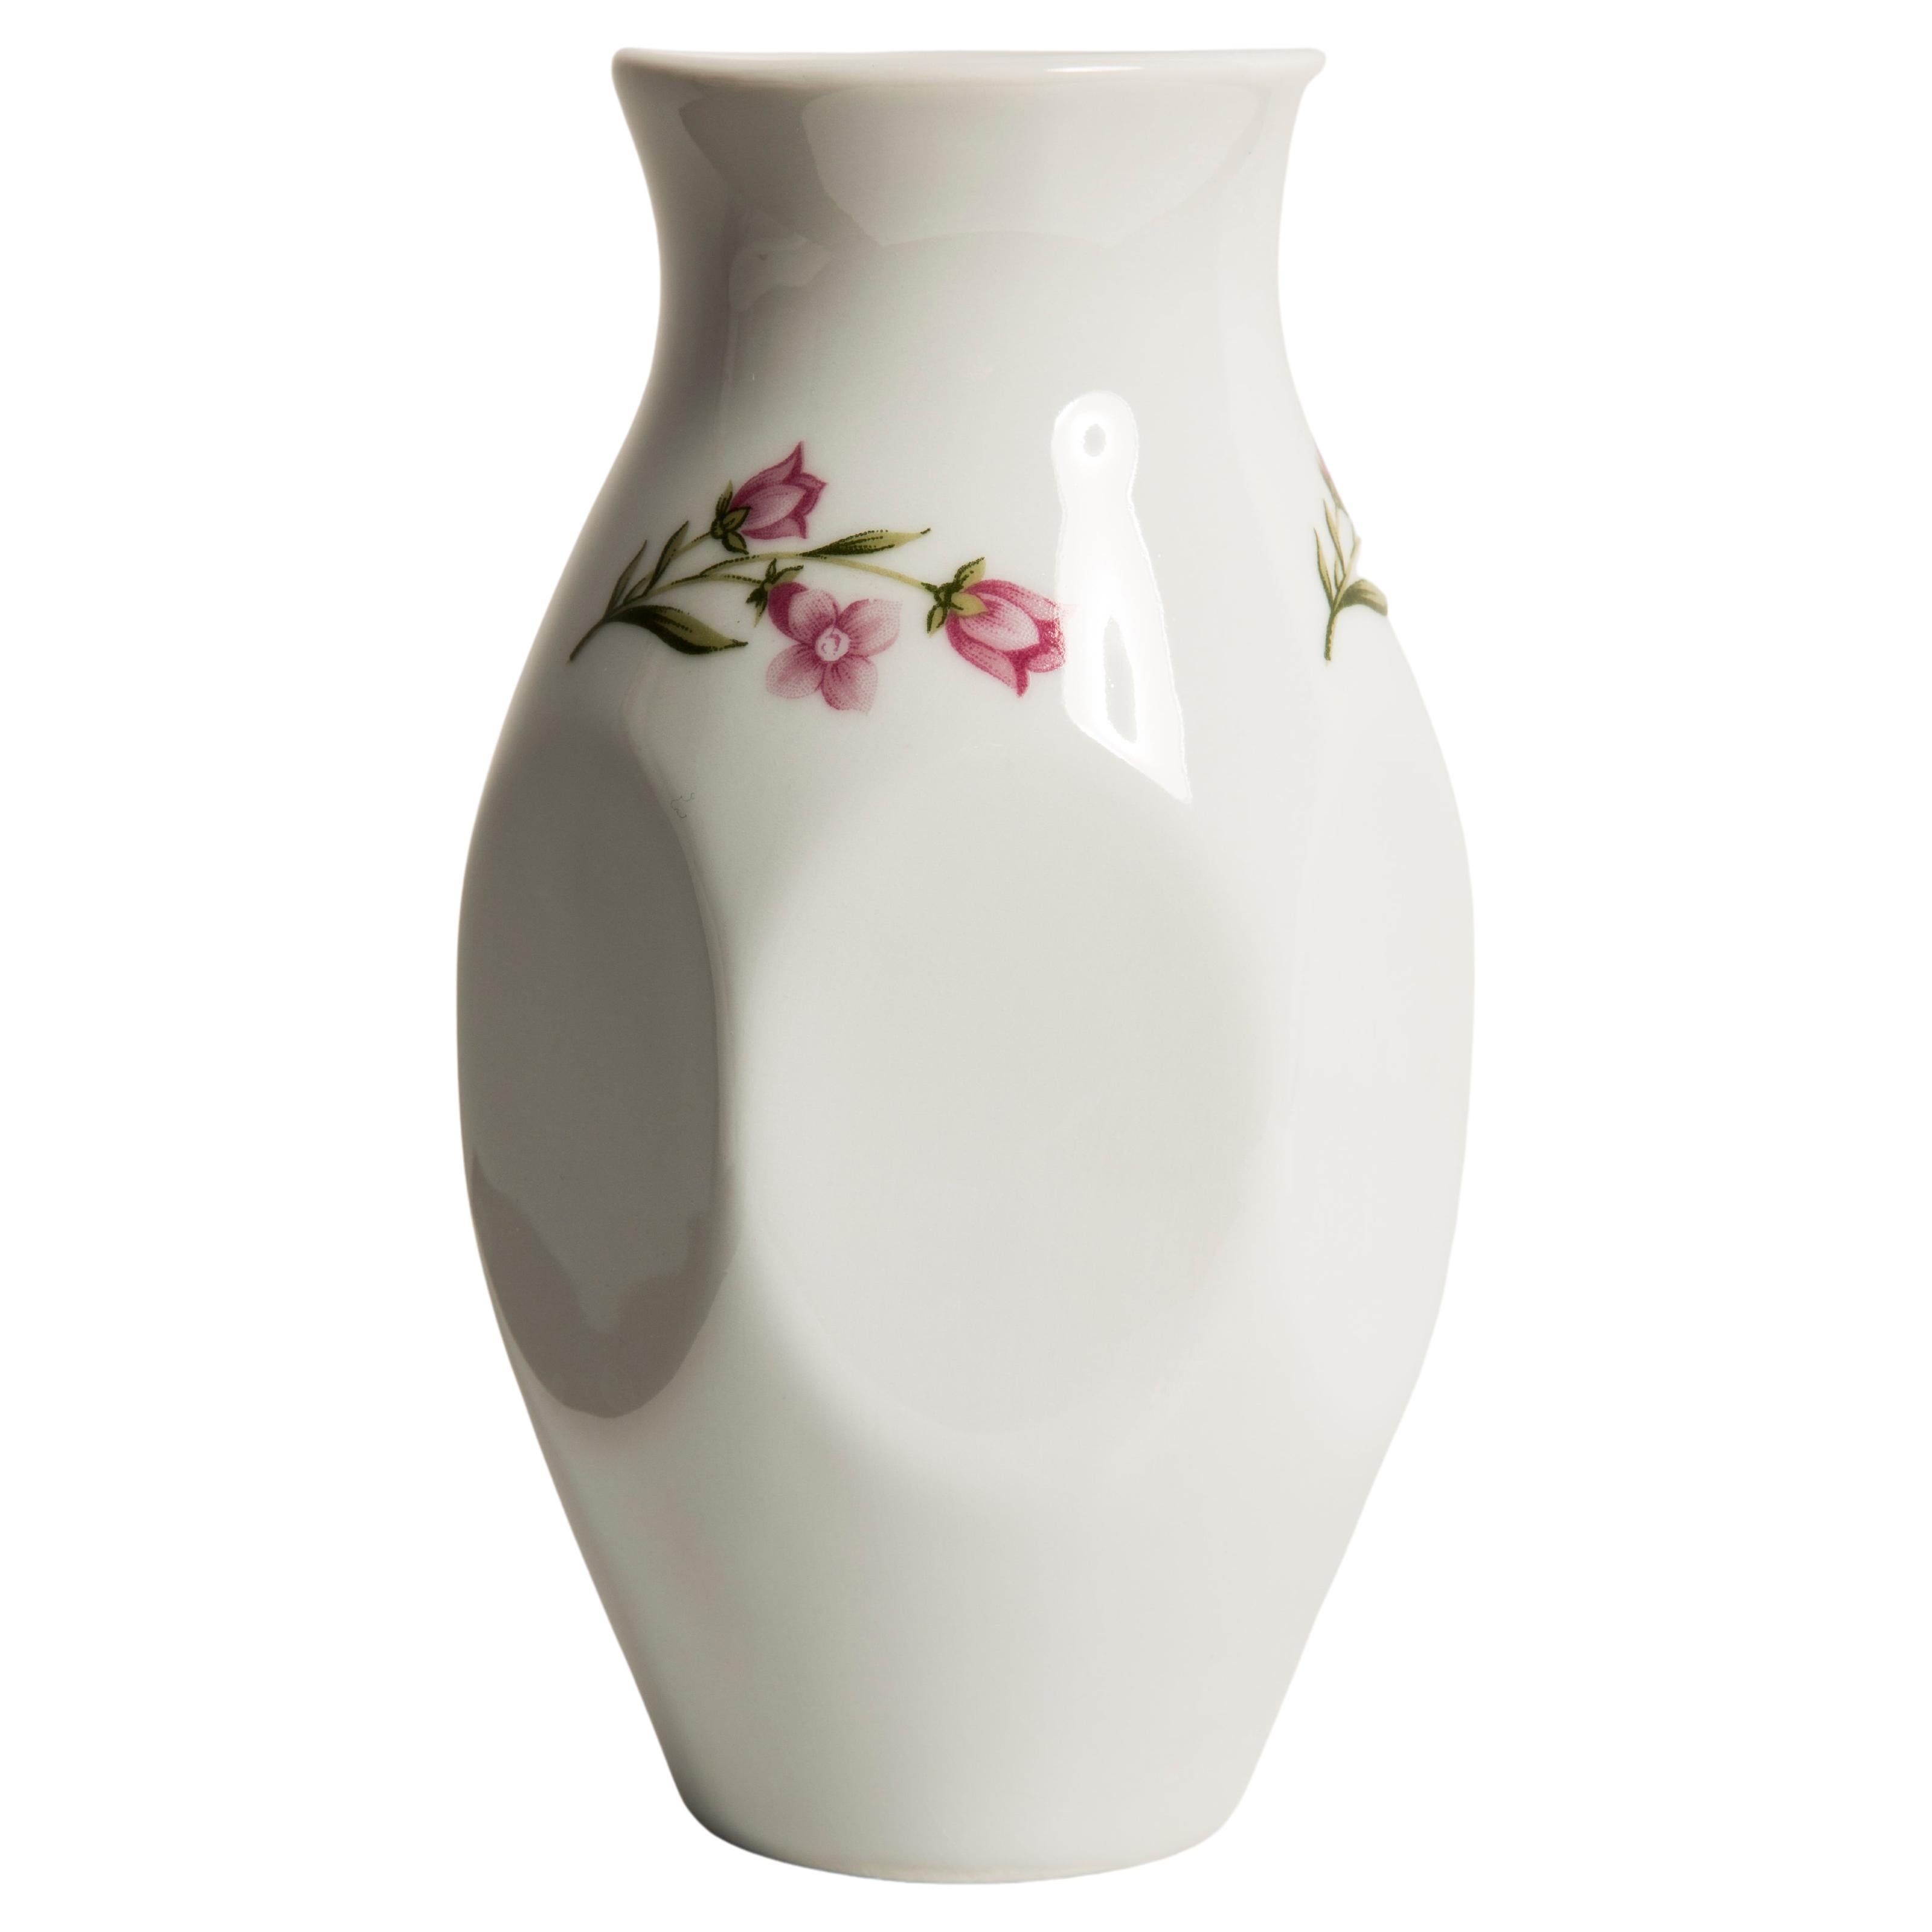 Midcentury Porcelain White Mini Vase with Roses, Hand Painted, Europe, 1960s